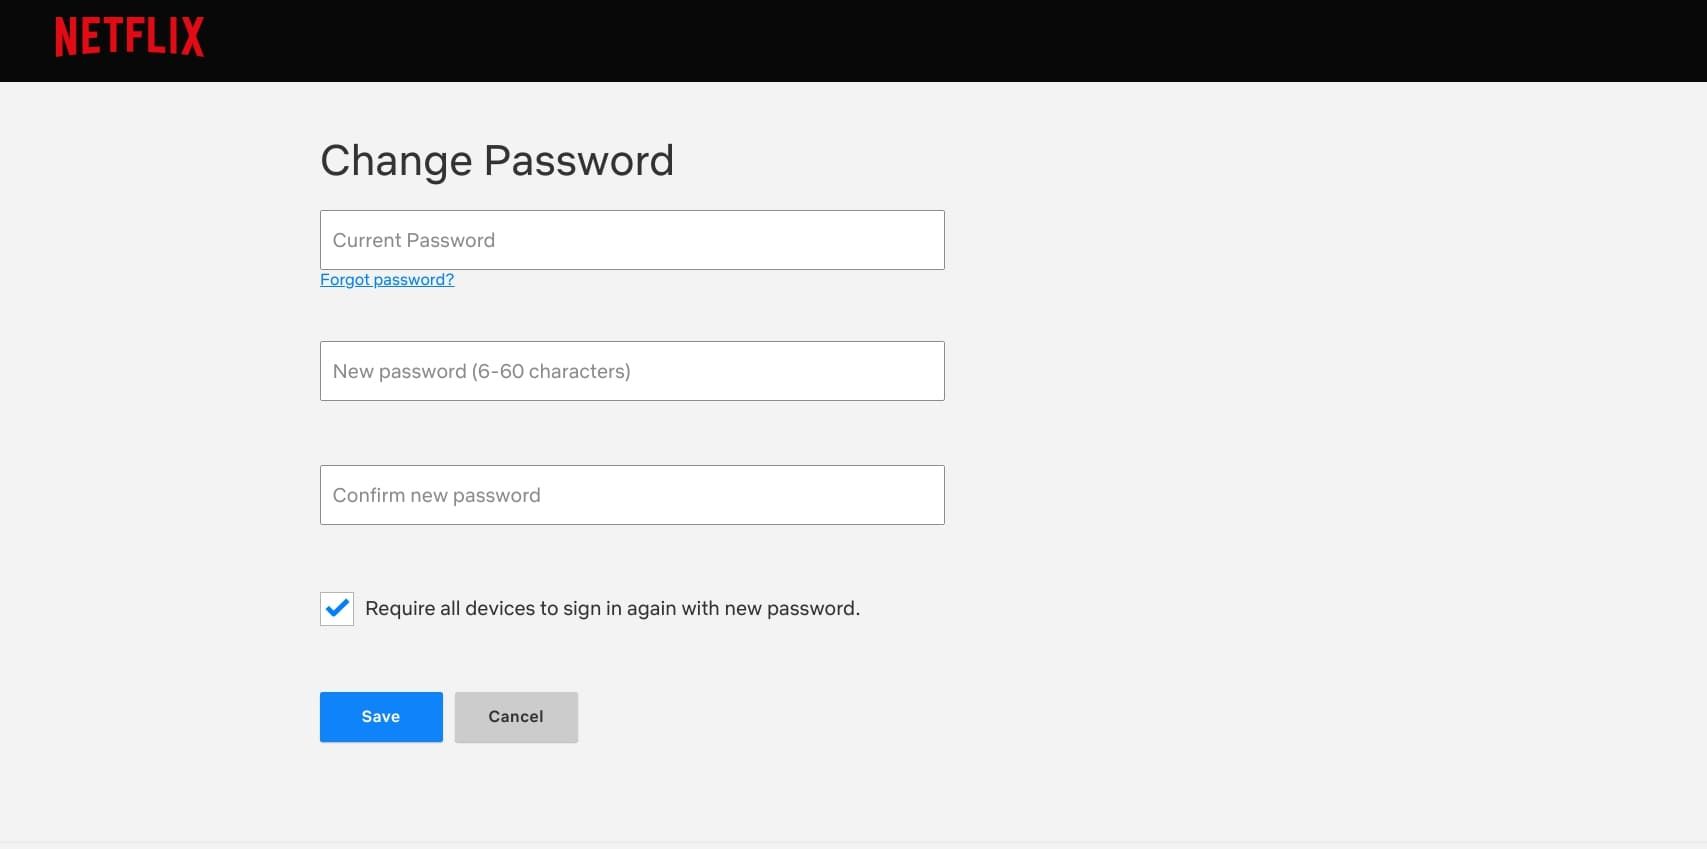 netflix change password webpage screenshot